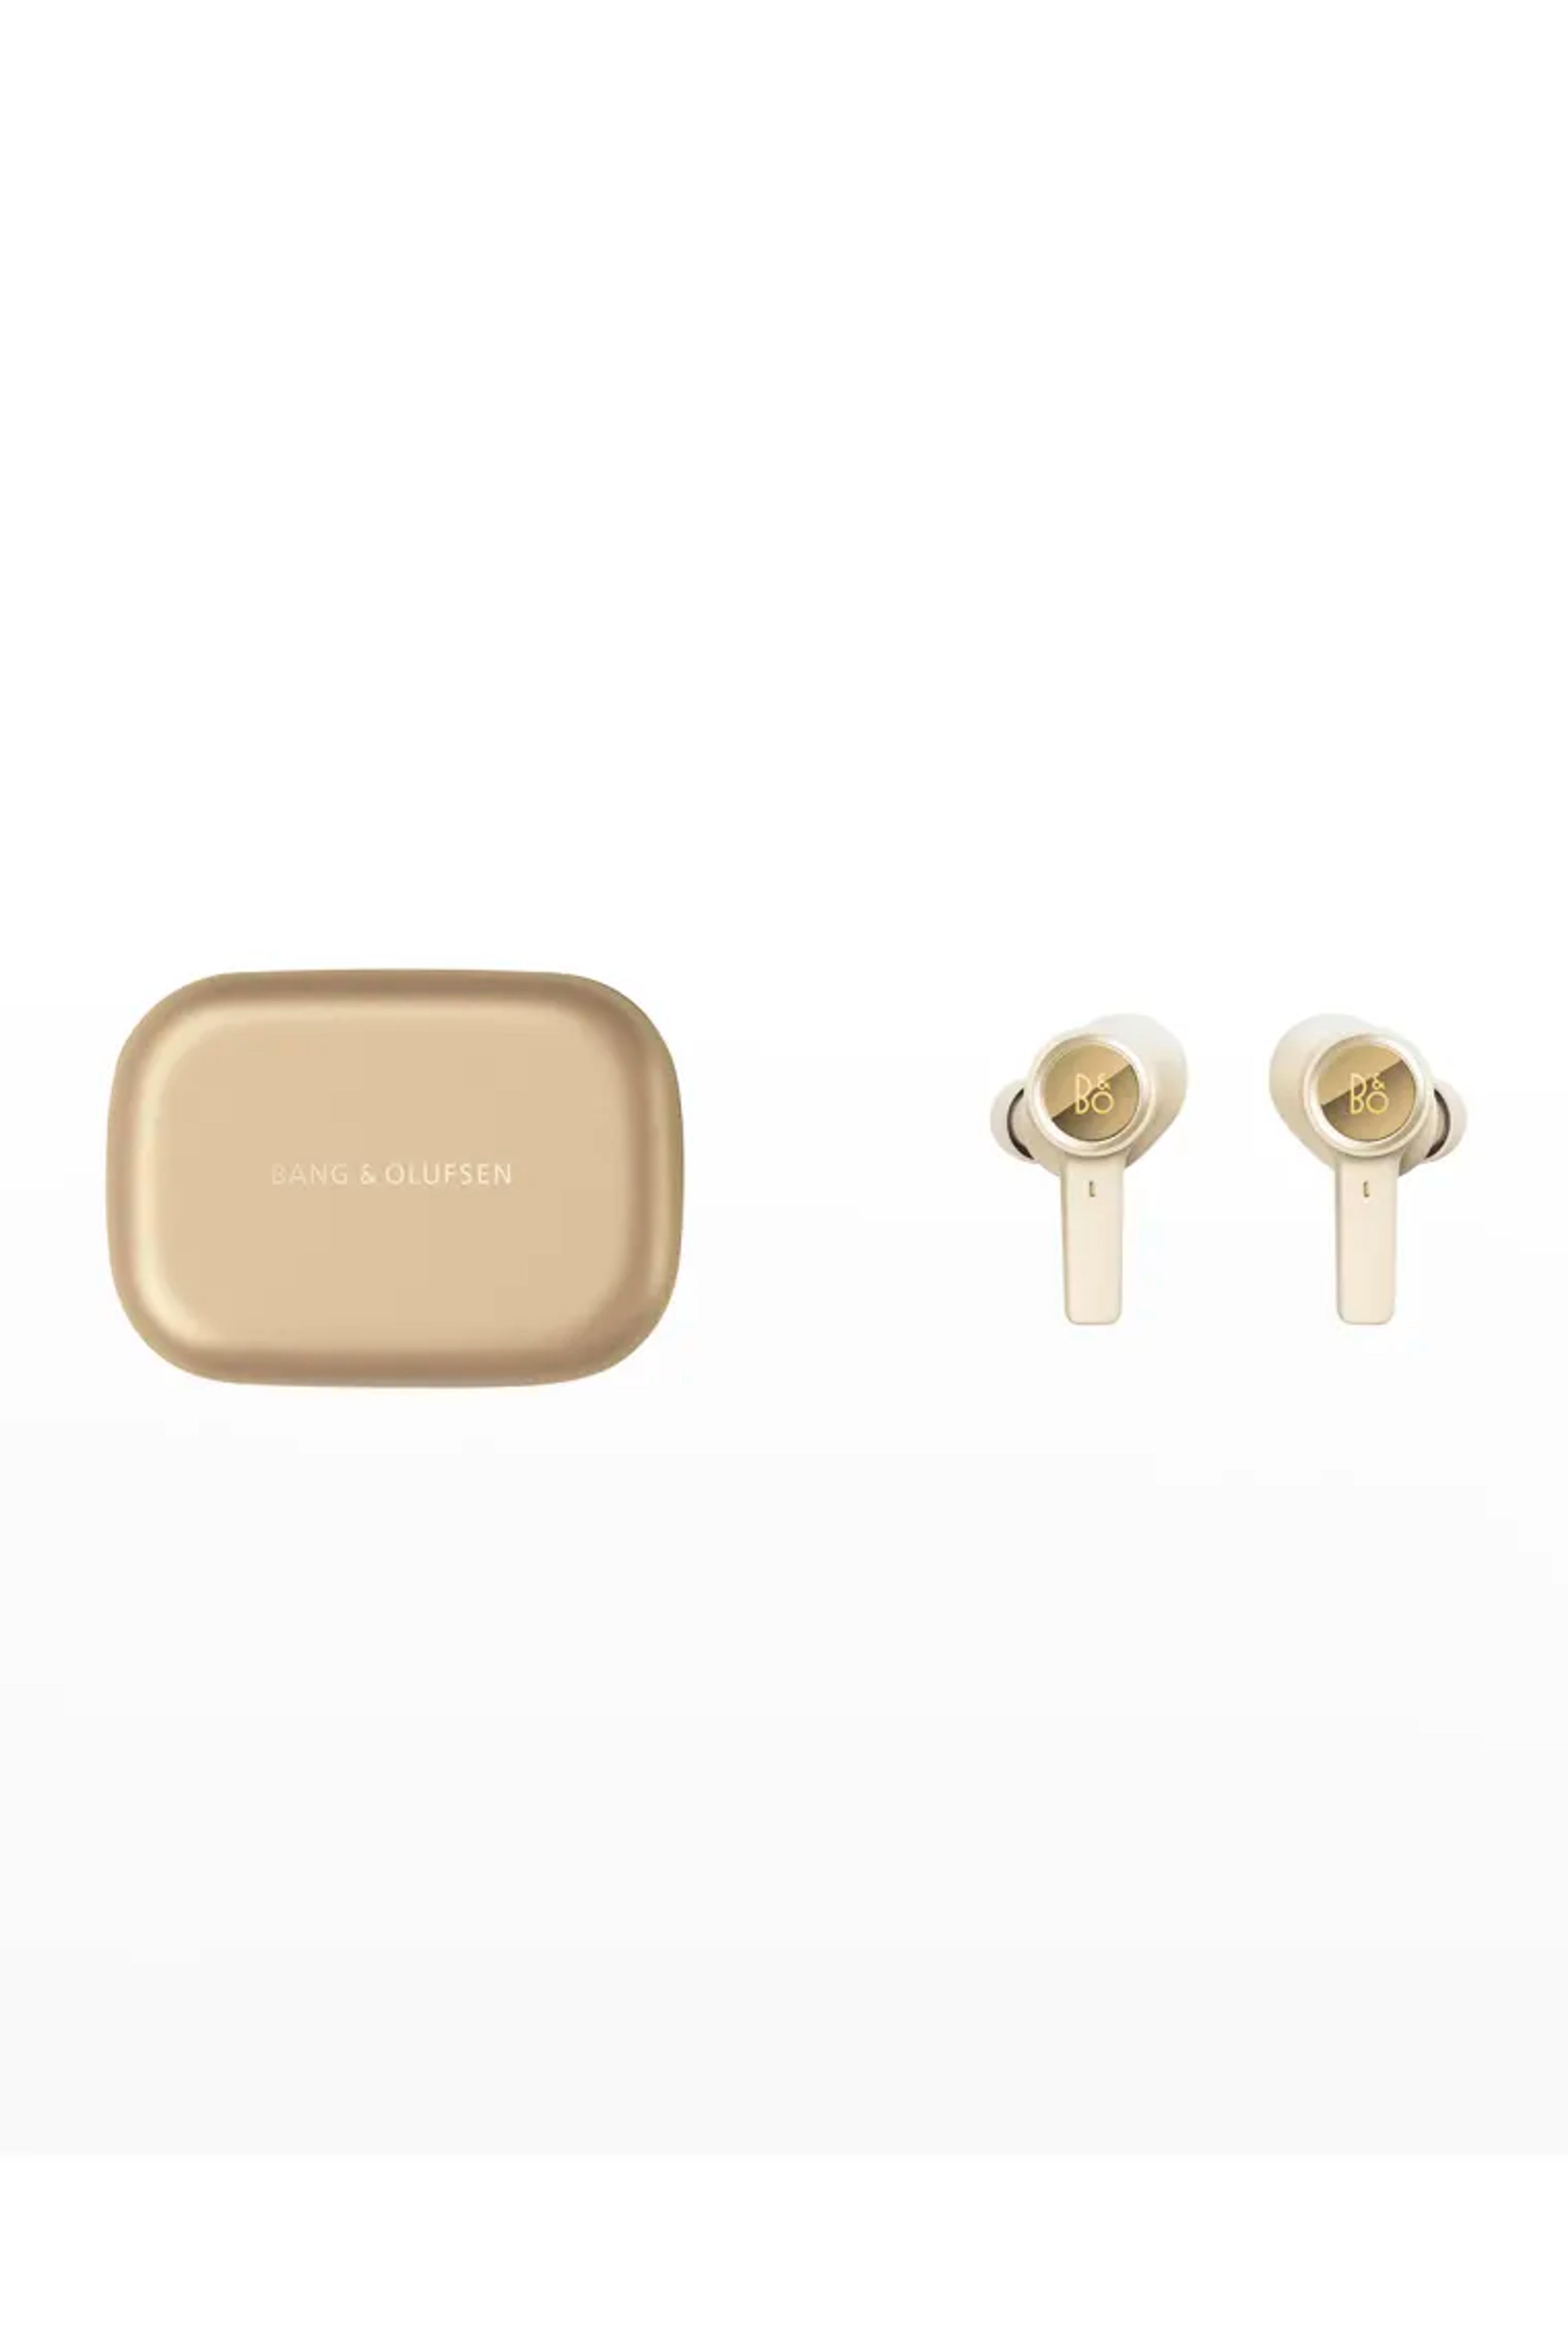 Bang & Olufsen Beoplay EX Wireless Earbuds | Neiman Marcus